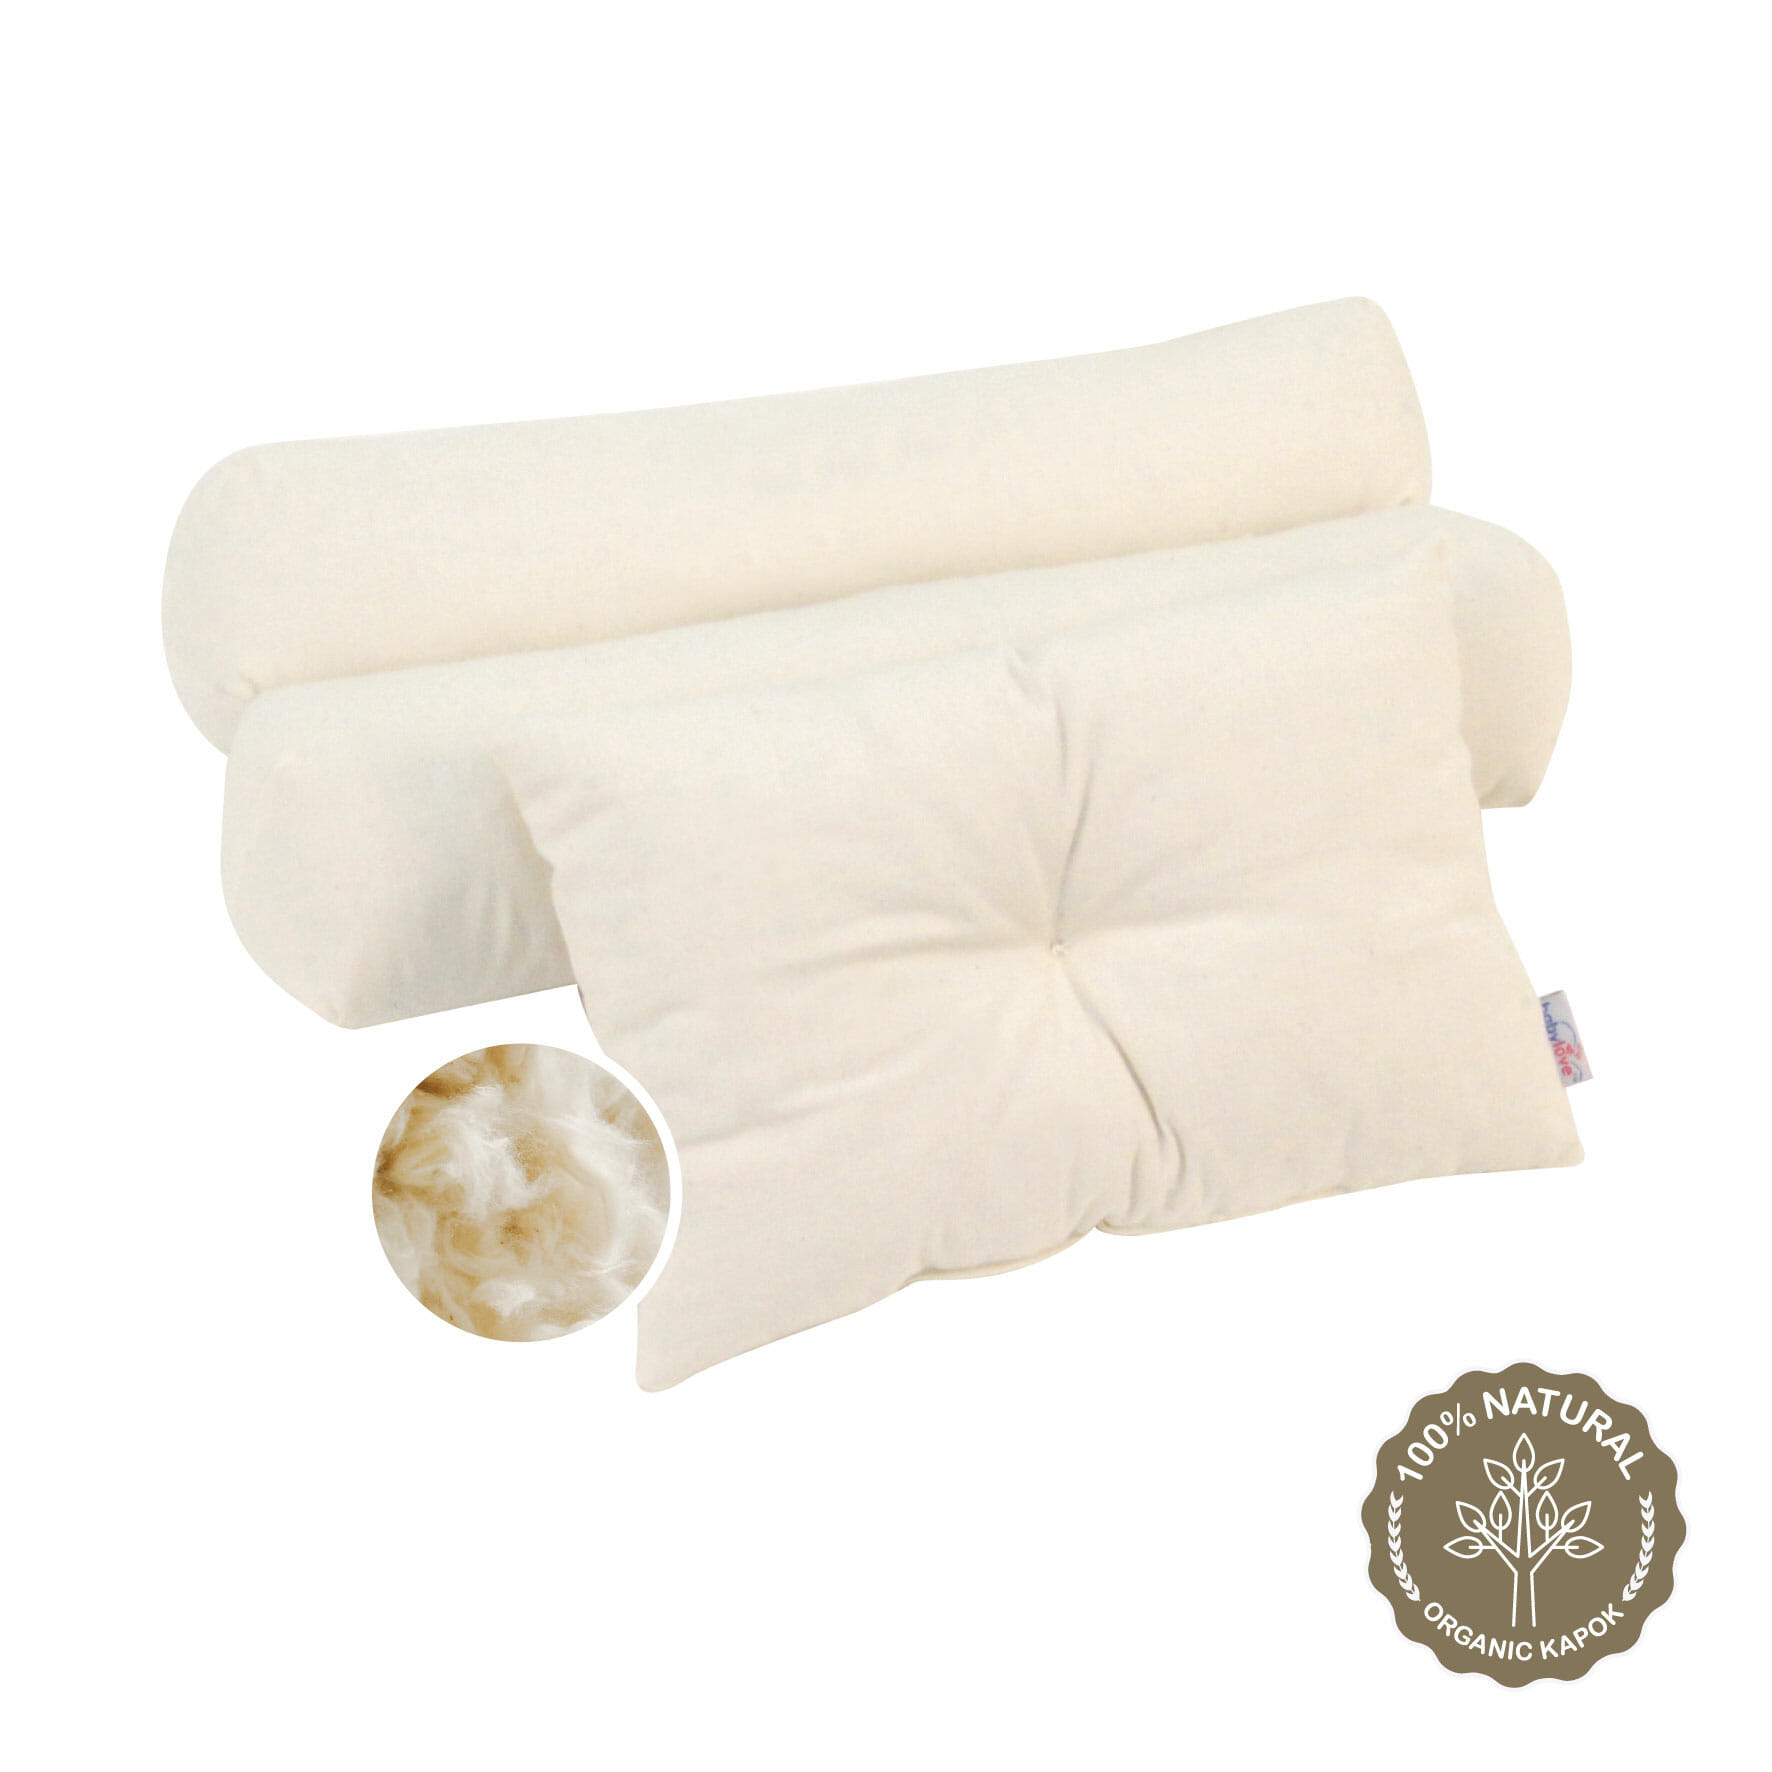 Babylove 100% Organic Kapok Dimple Pillow & Bolster Set with Case